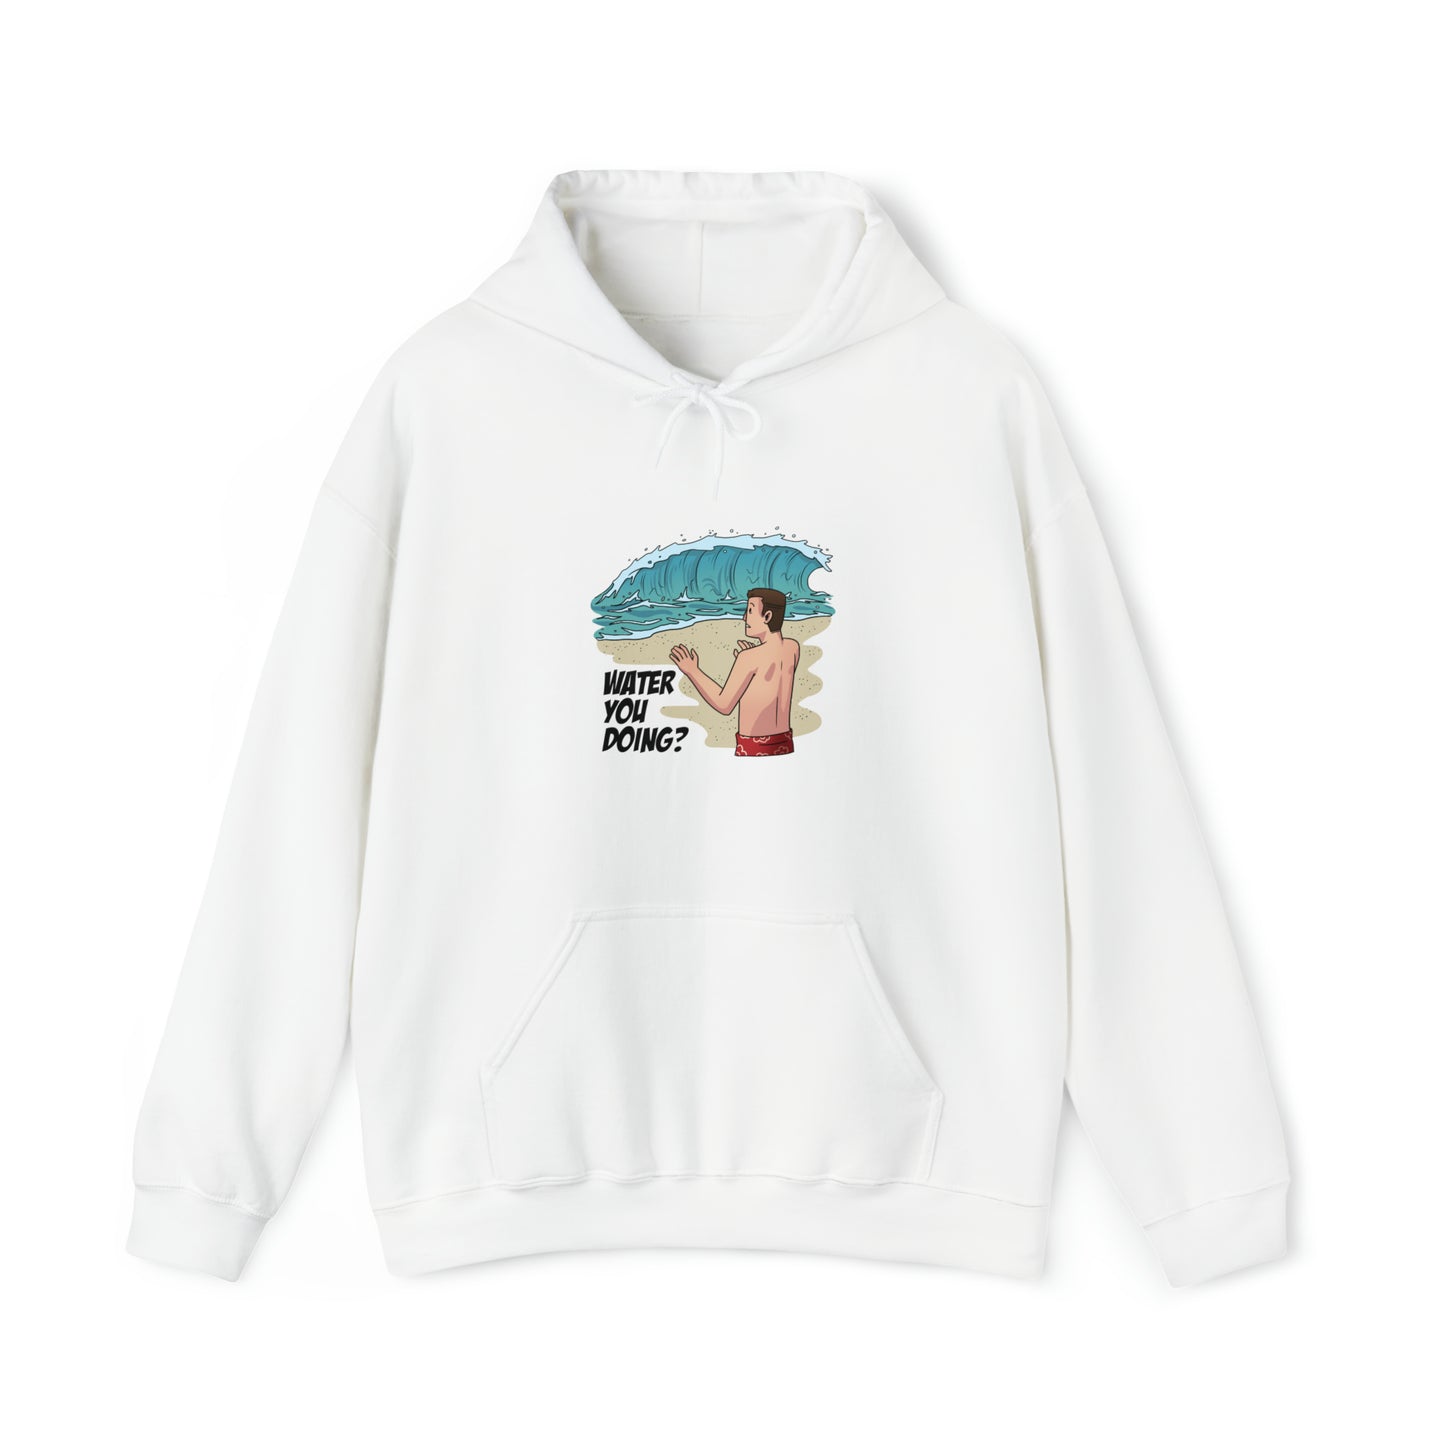 Custom Parody Hooded Sweatshirt, WATER you doing? design